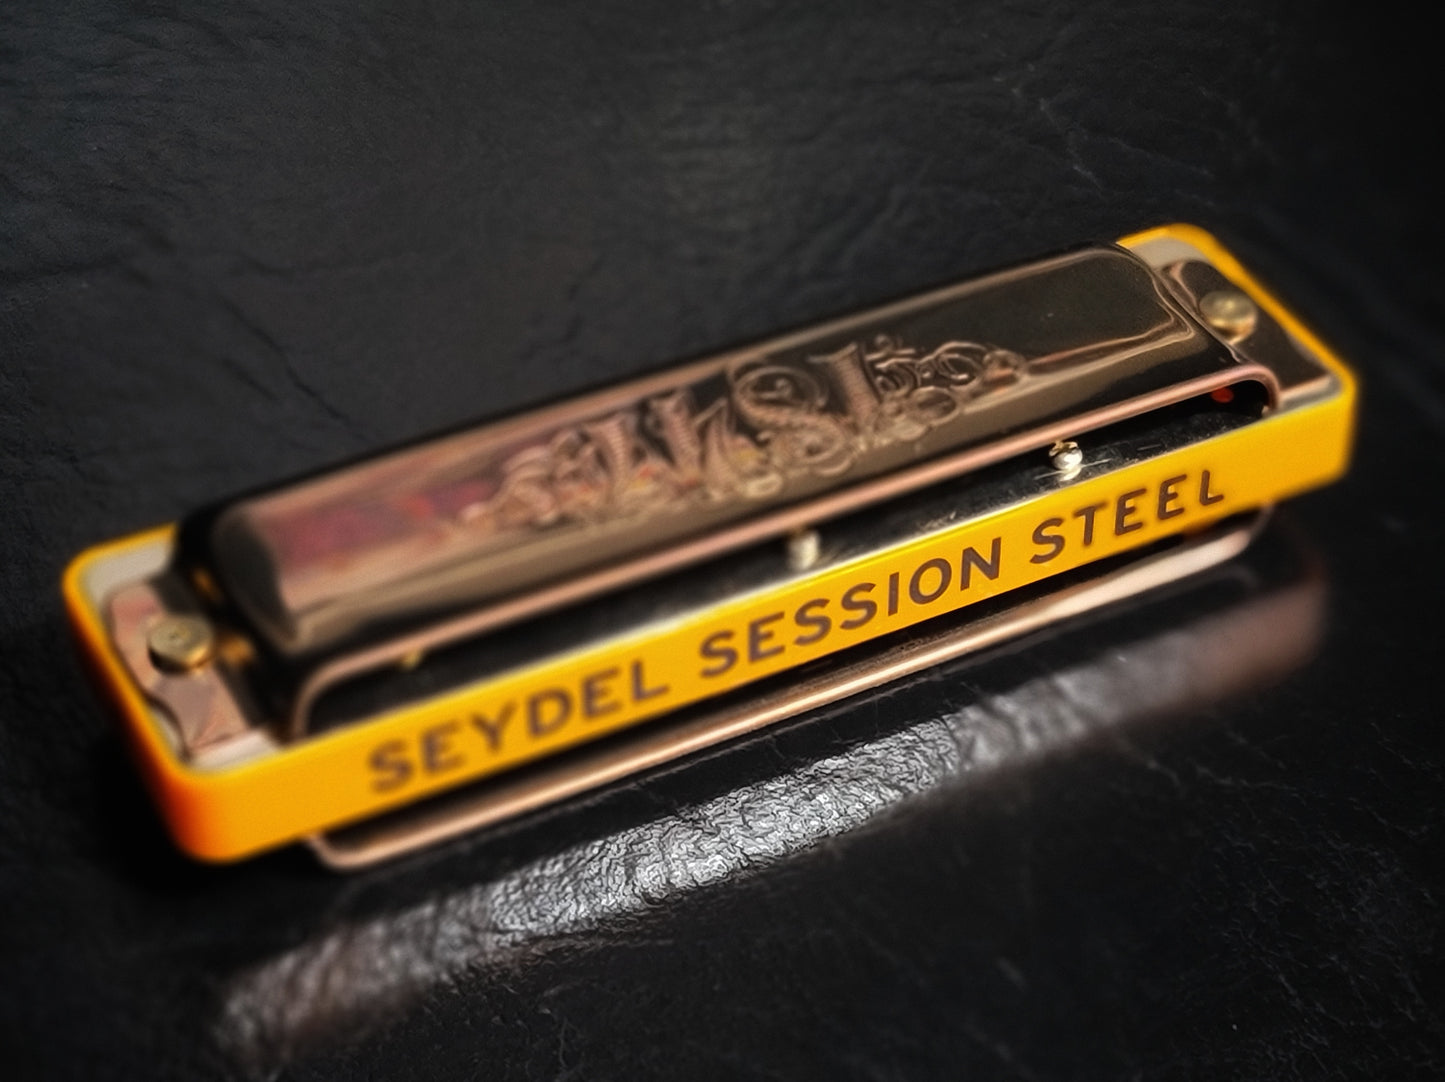 Seydel Session Steel Plus Antiqued